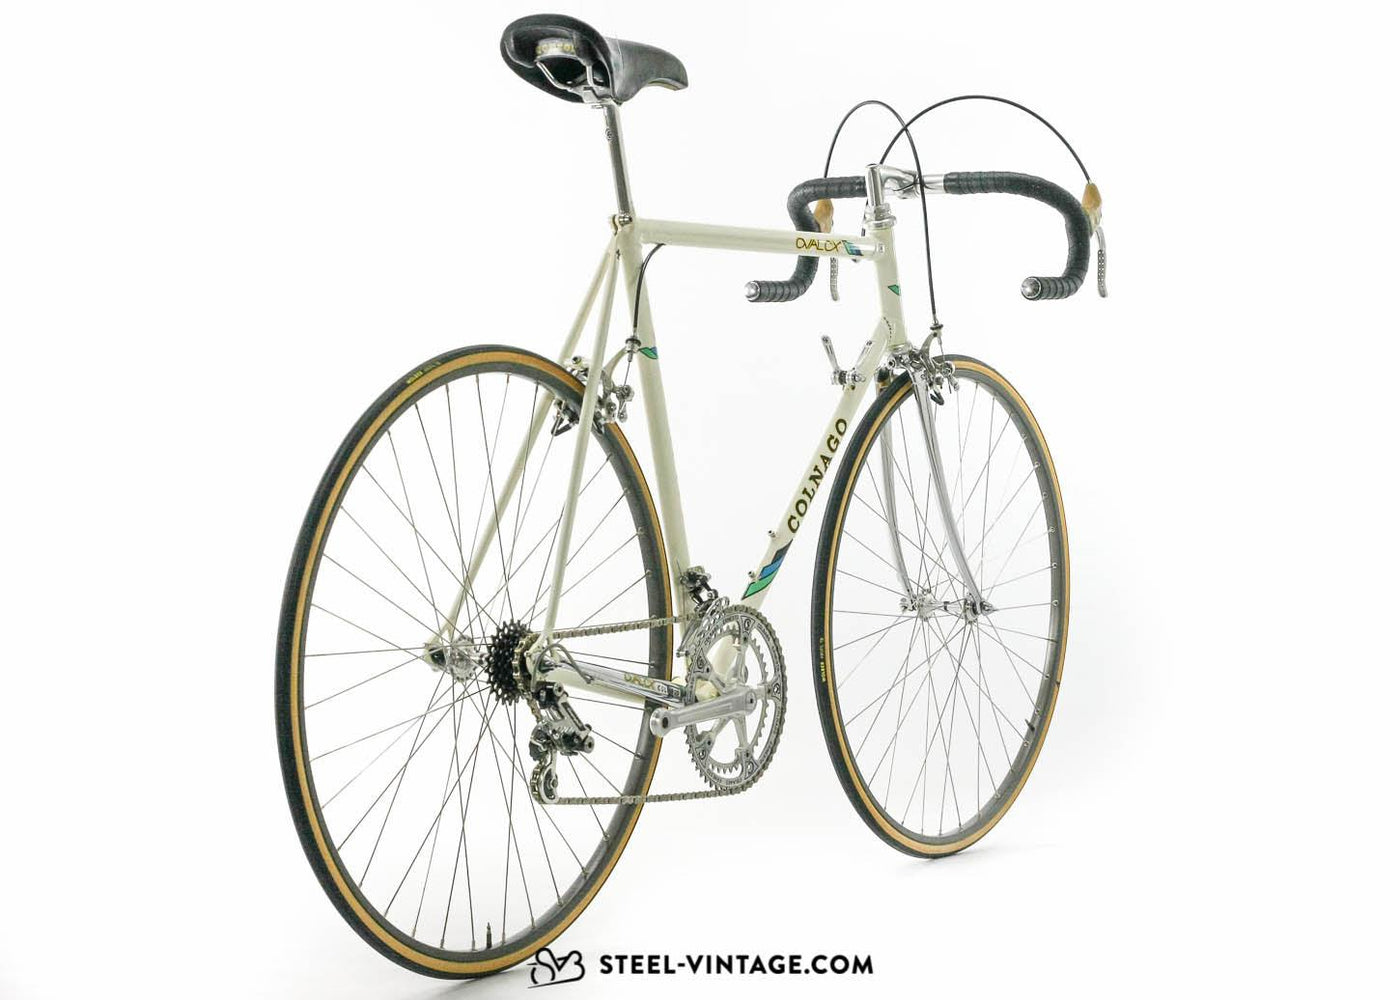 Colnago Oval CX 1980s Collectible Road Bike - Steel Vintage Bikes